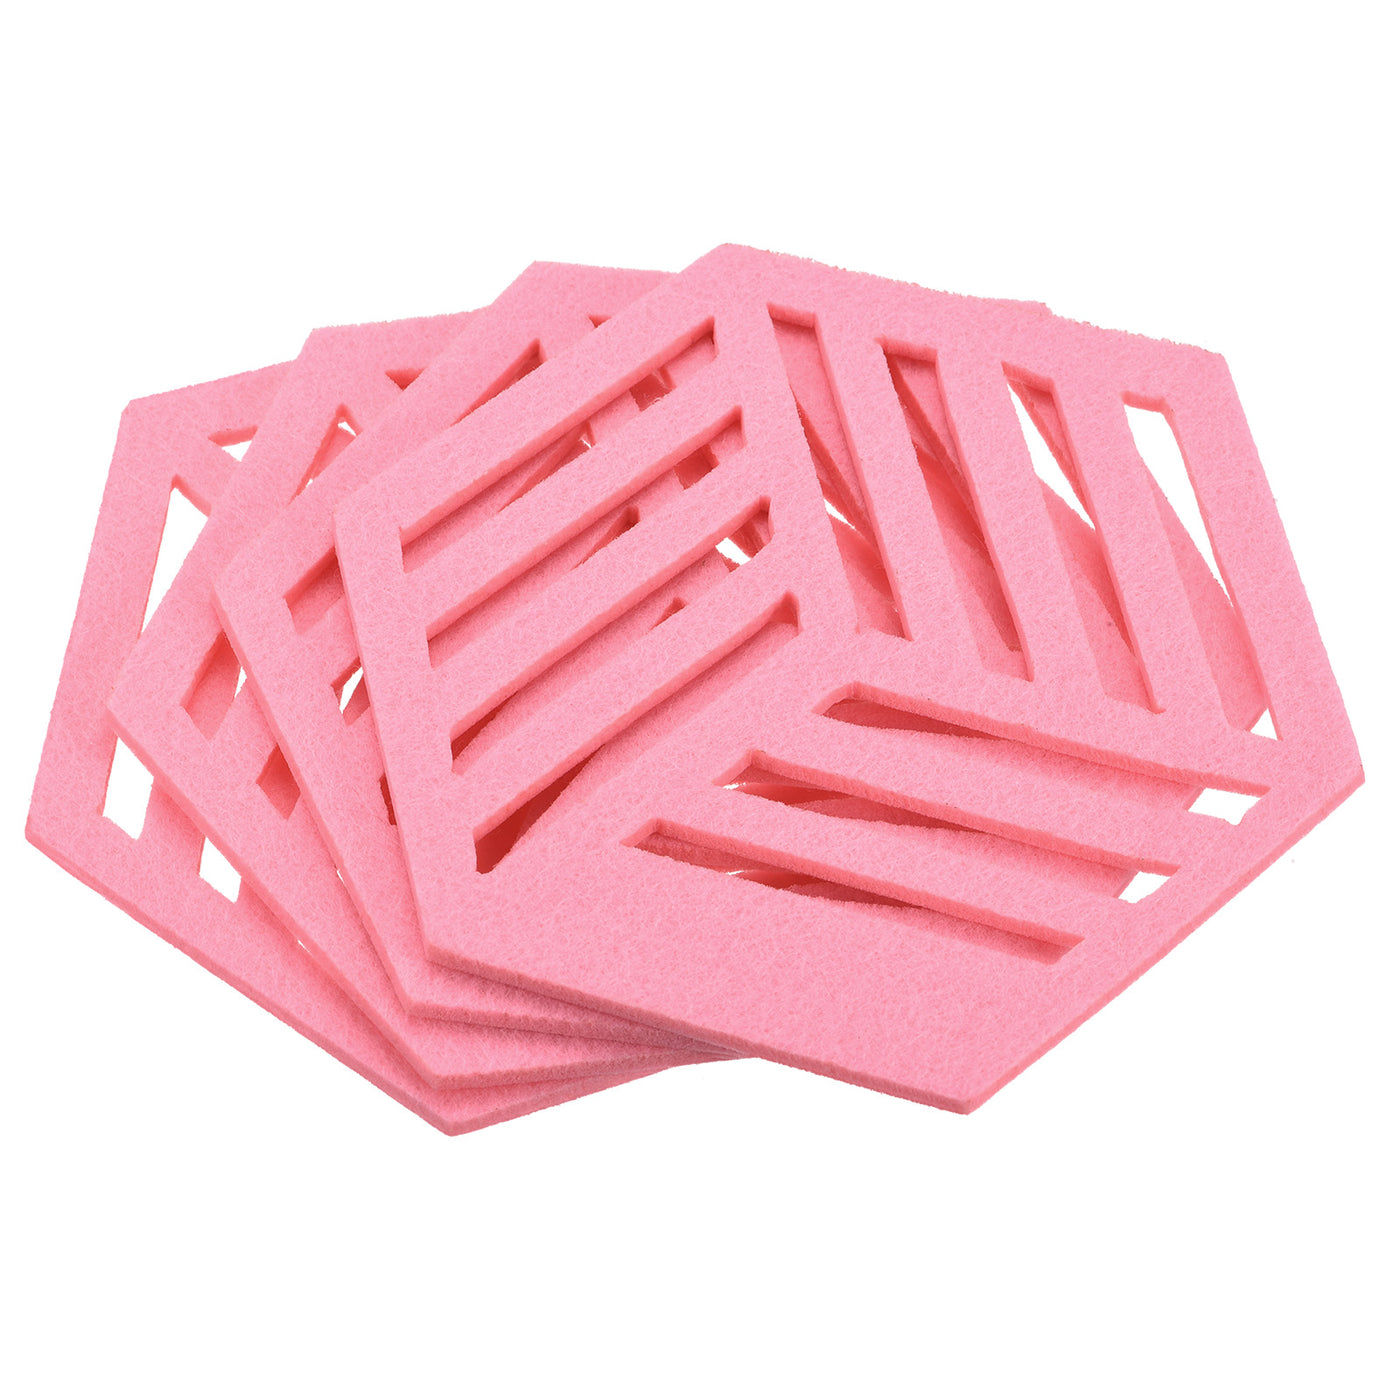 uxcell Uxcell Felt Coasters, 4pcs Hexagon Mat Pad Coaster for Drink Cup Pot Bowl Vase, Pink